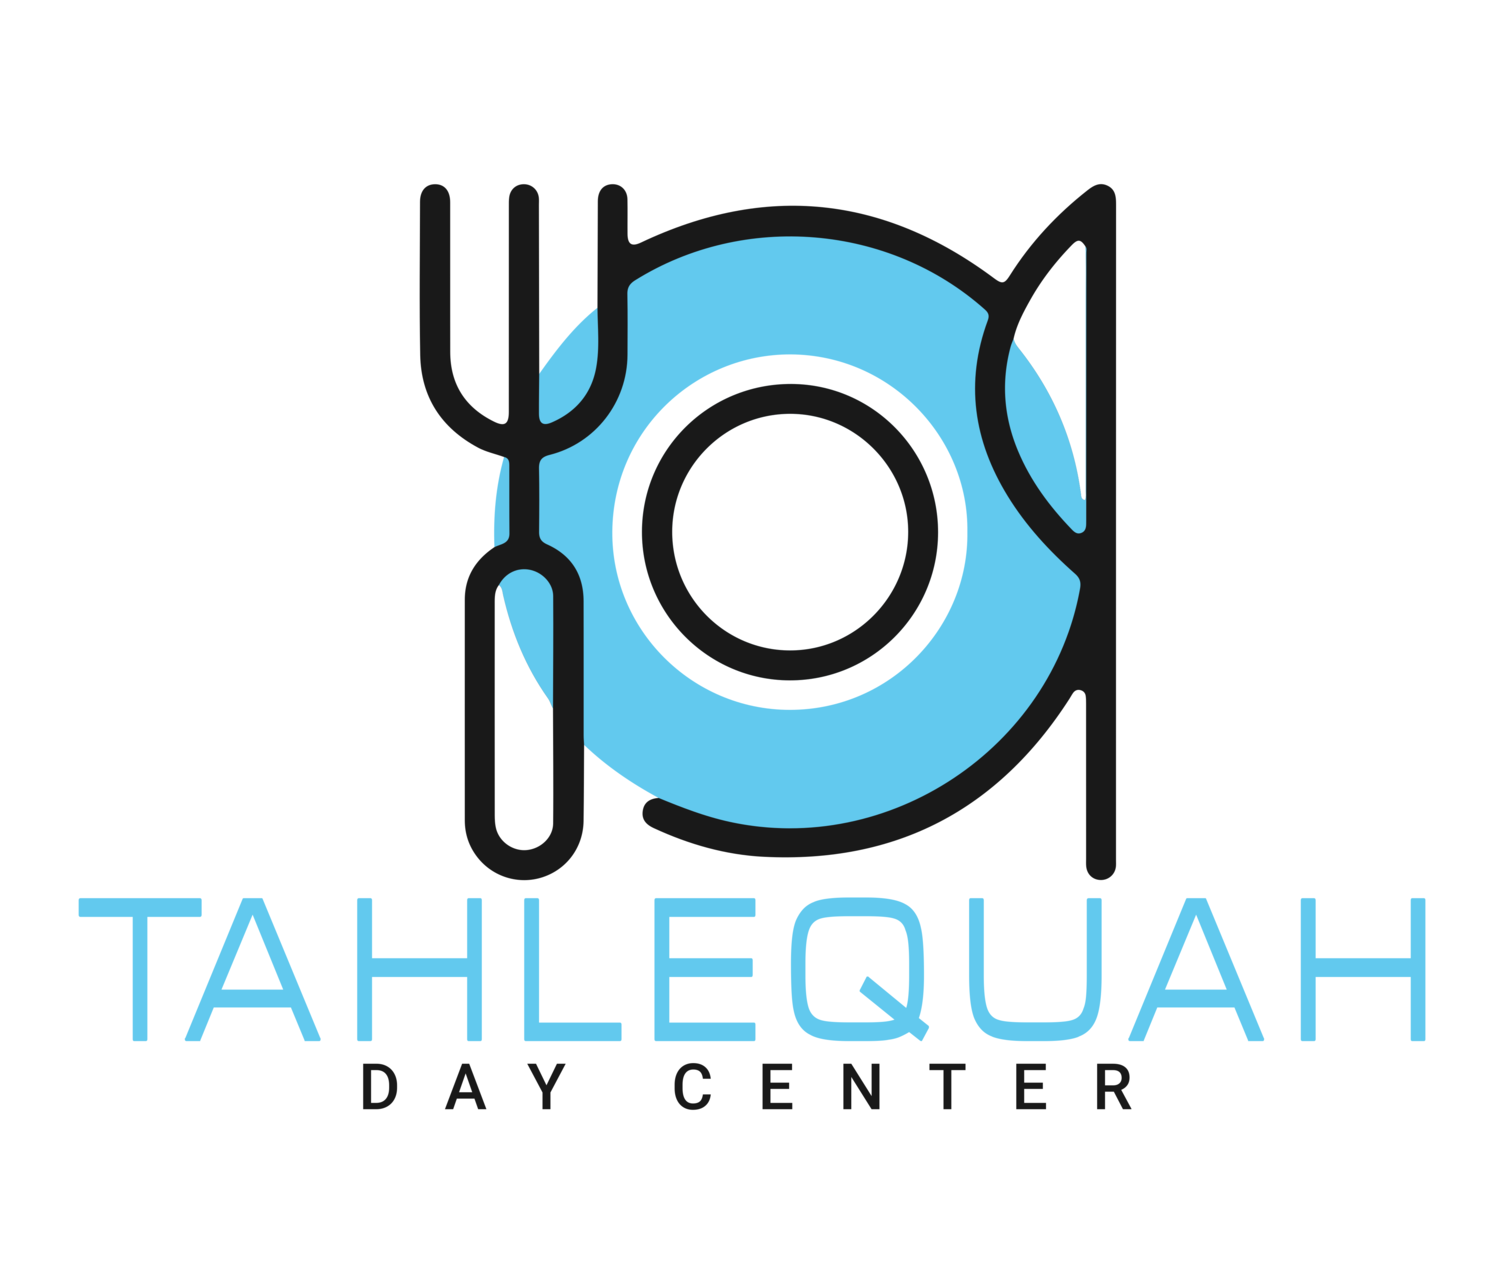 Tahlequah Day Center